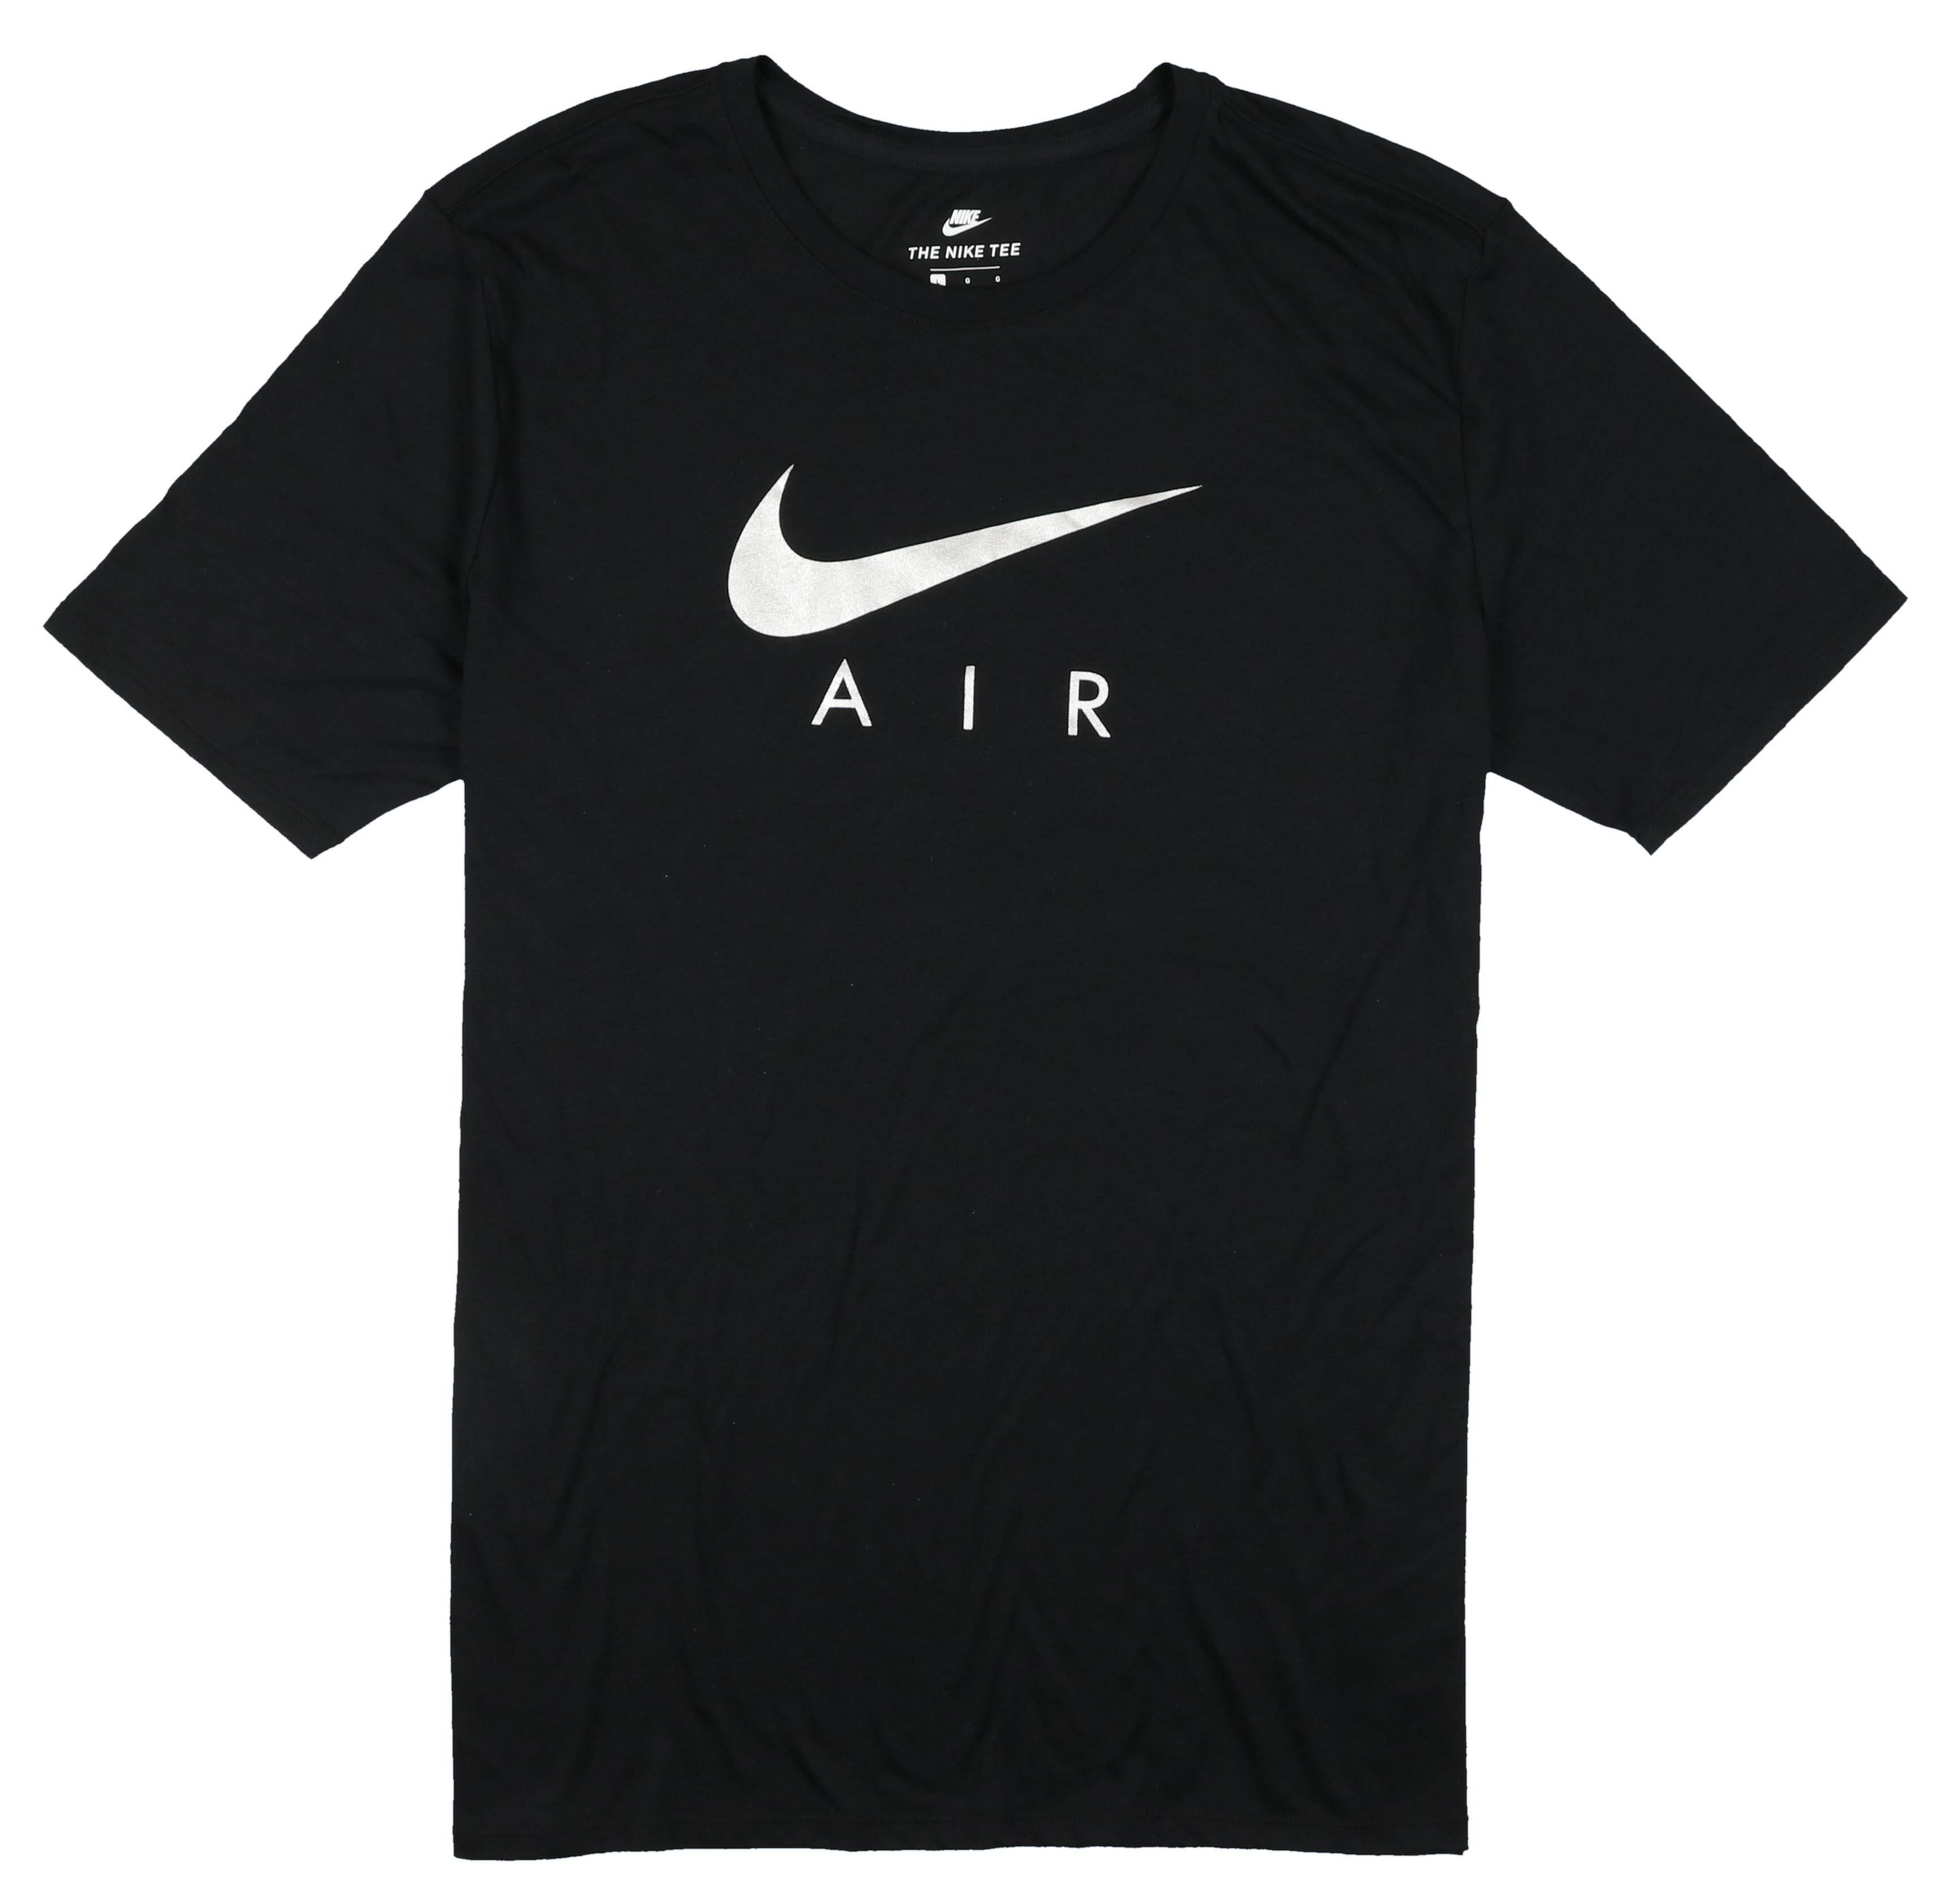 Футболки найк мужские купить. Nike t-Shirt Black. Футболка Nike Swoosh черная. Nike Black Shirt. Футболка Nike big Swoosh черная.